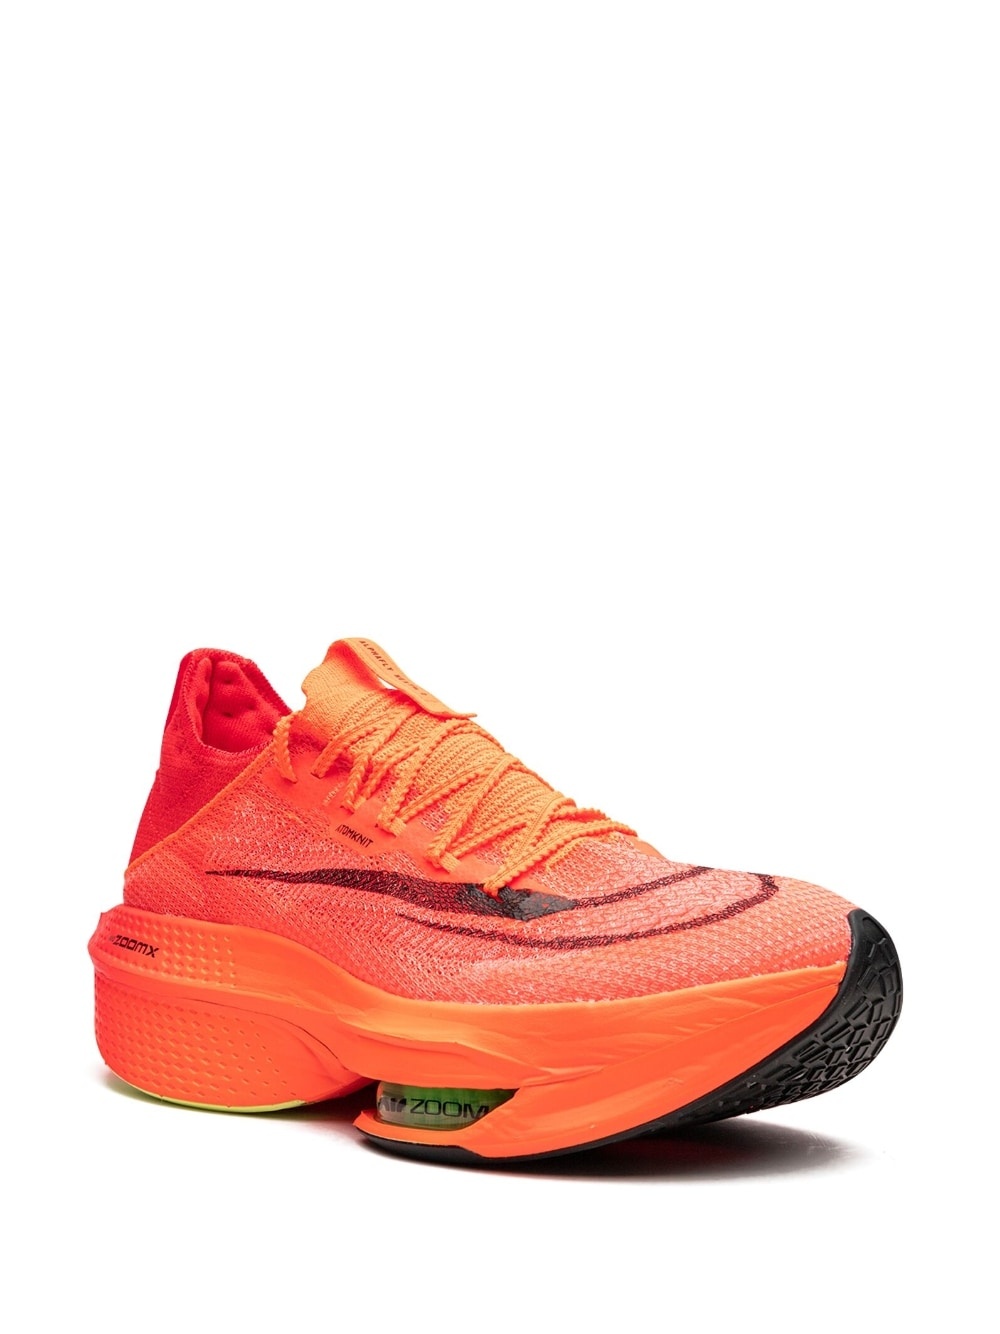 Air Zoom Alphafly Next% 2 "Total Orange" sneakers - 2